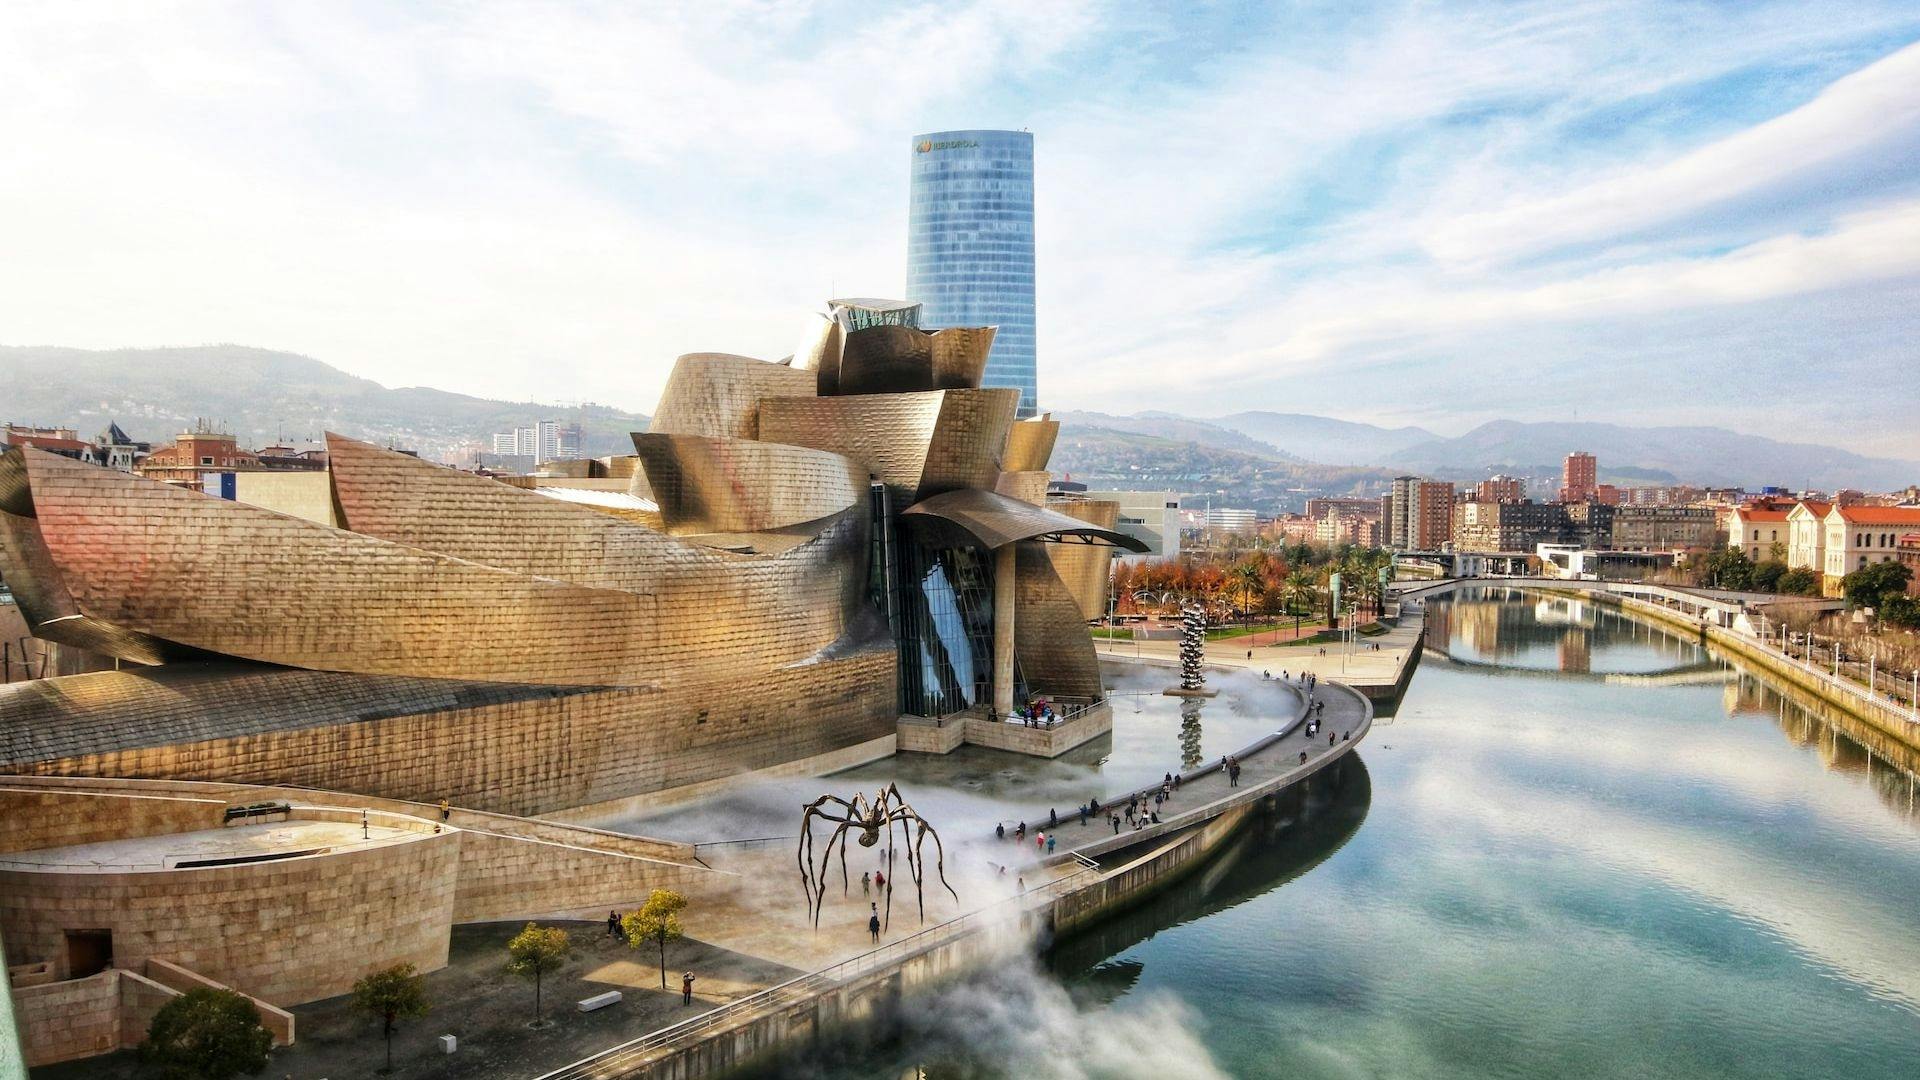 Billet d'entrée au musée Guggenheim de Bilbao